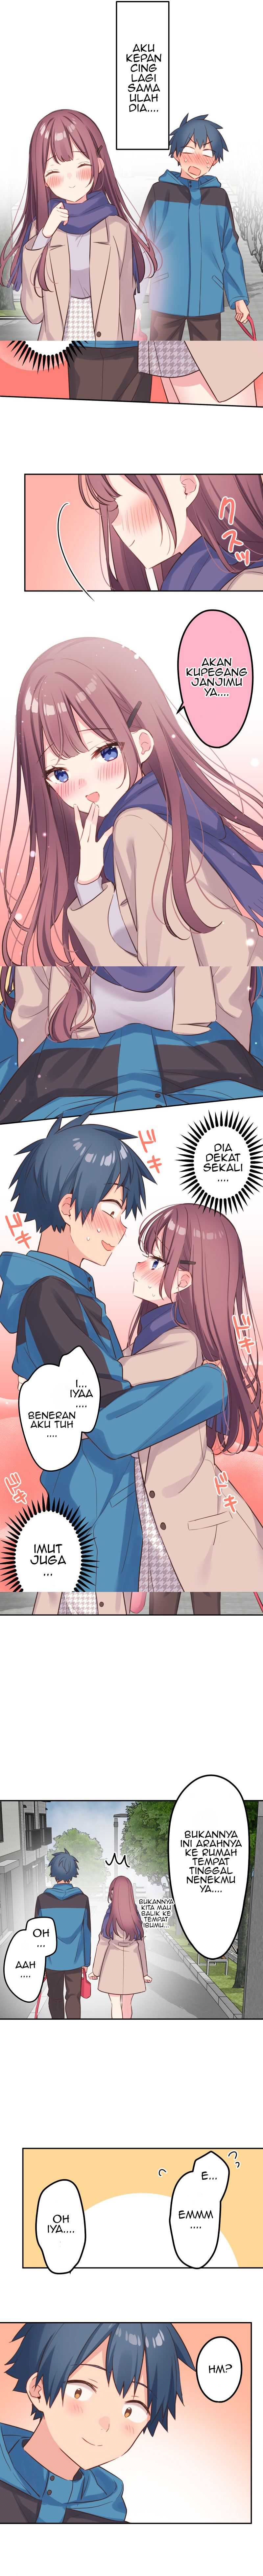 Waka-chan Is Flirty Again Chapter 124